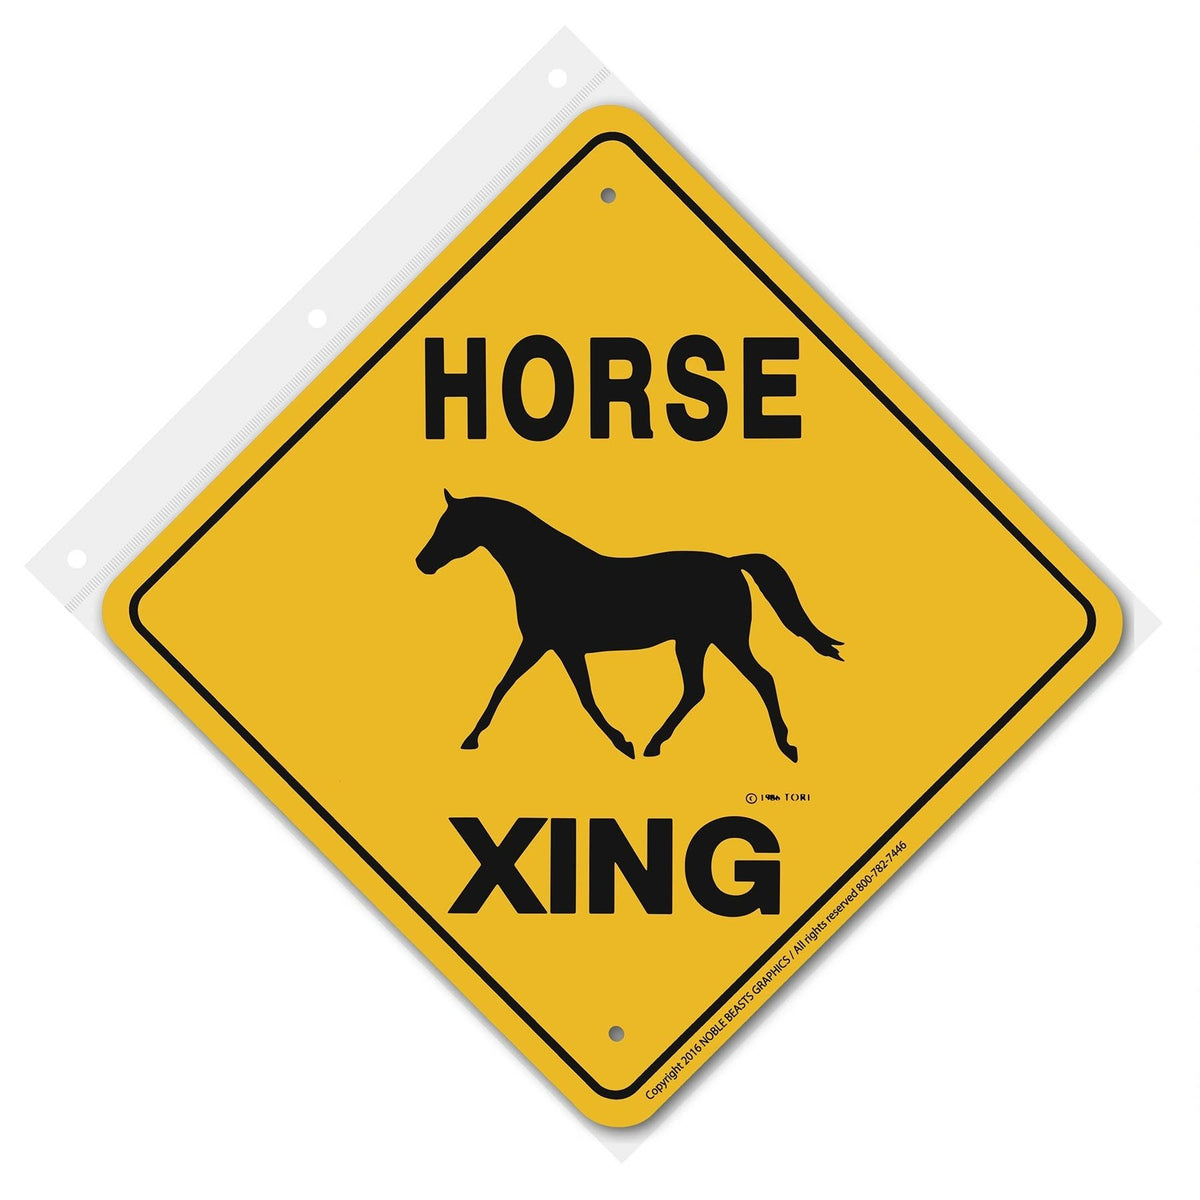 Horse Xing Sign Aluminum 12 in X 12 in #20414